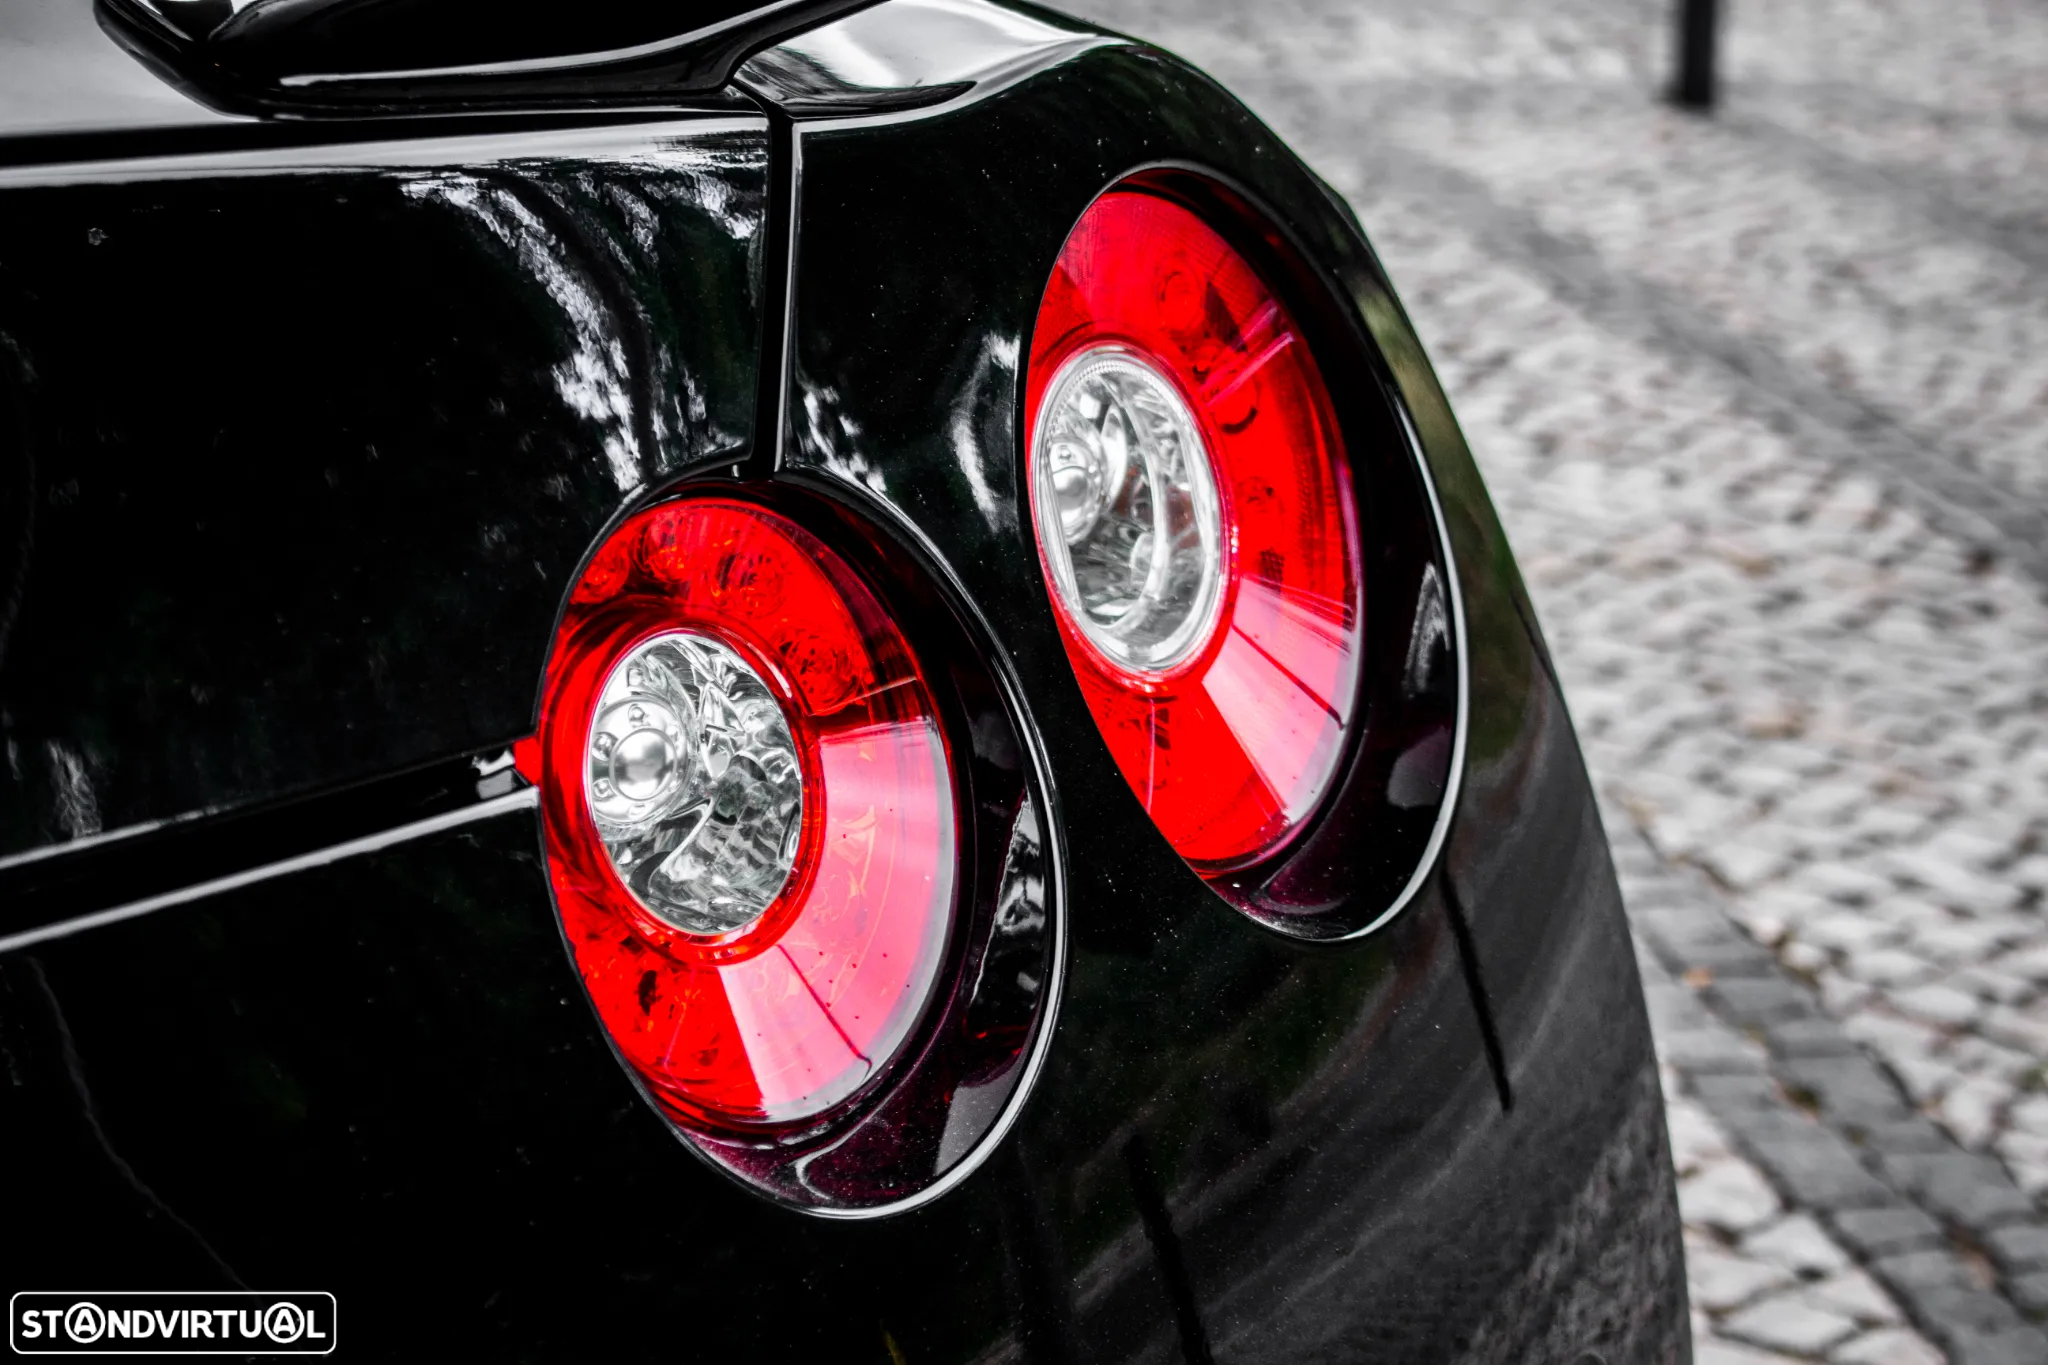 Nissan GT-R Black Edition - 14